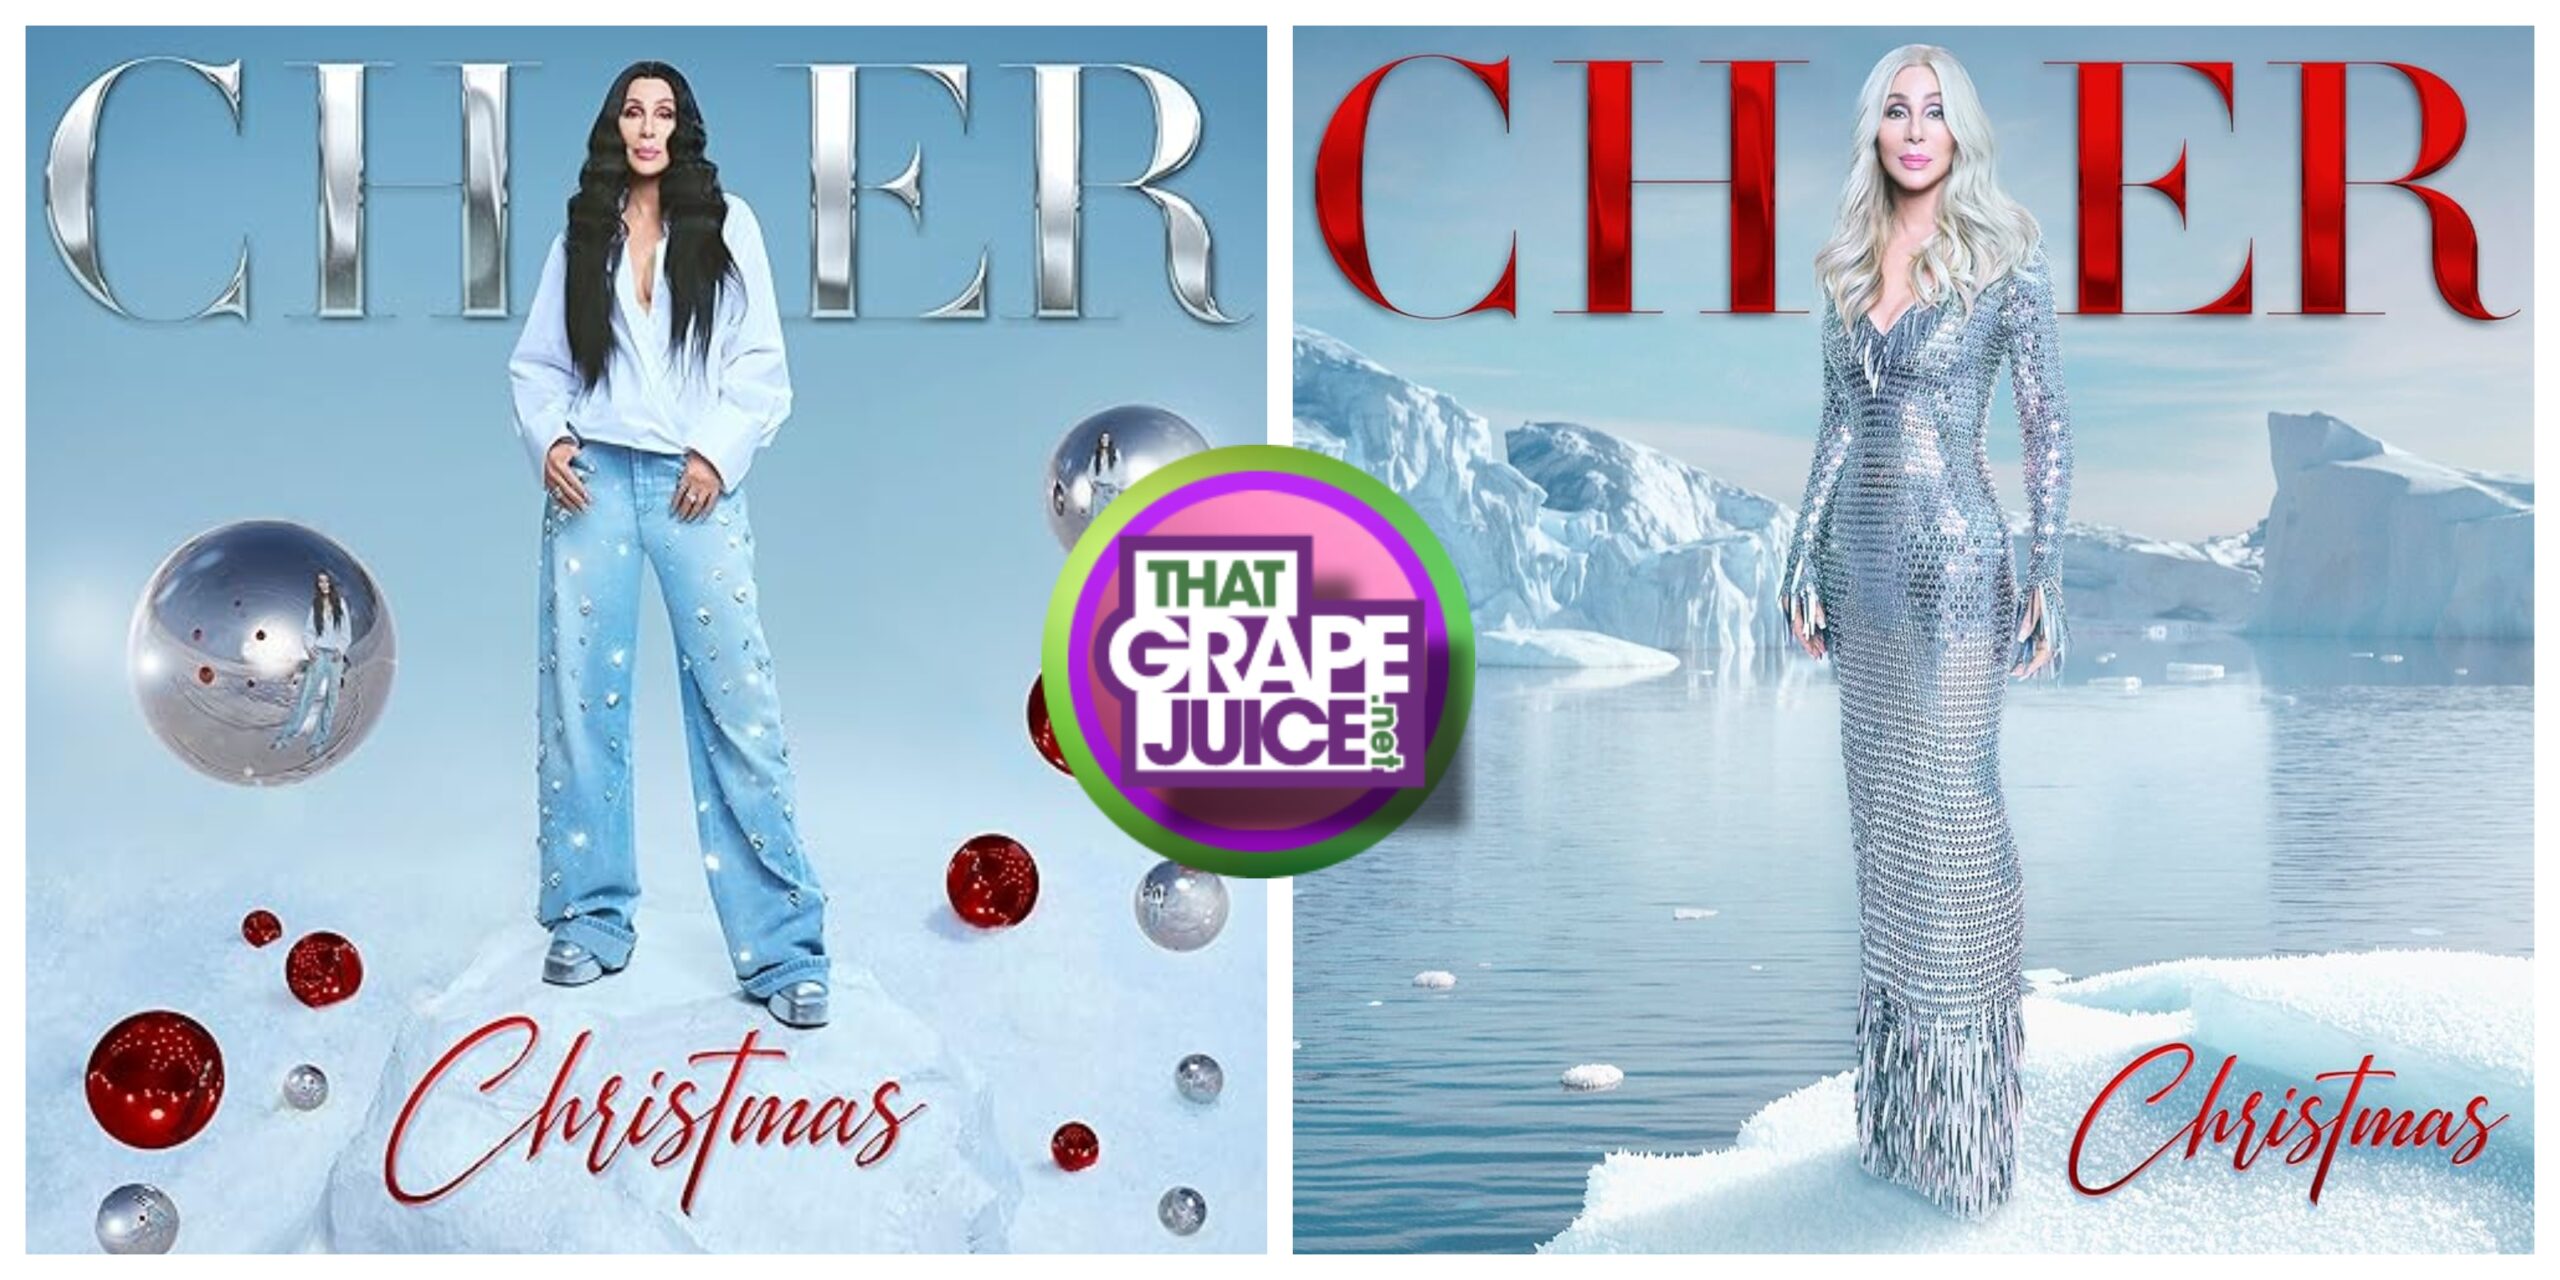 Stream Cher's 'Christmas' Album [featuring Stevie Wonder, Cyndi Lauper